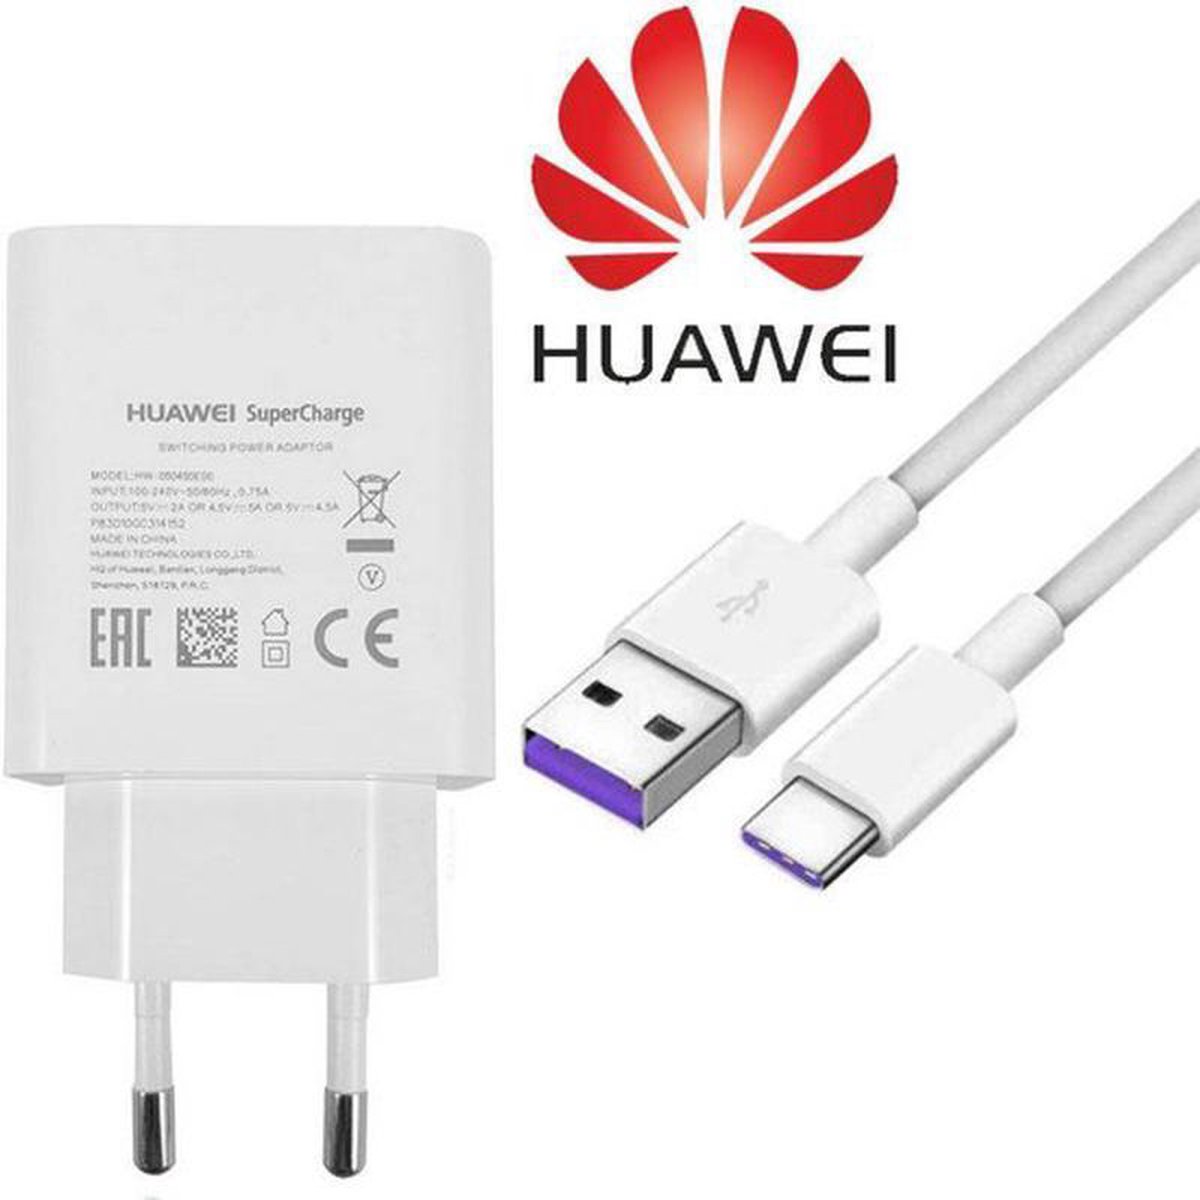 Huawei SuperCharge Adapter 4.5V/5A (EU) met USB-C kabel - Wit | bol.com